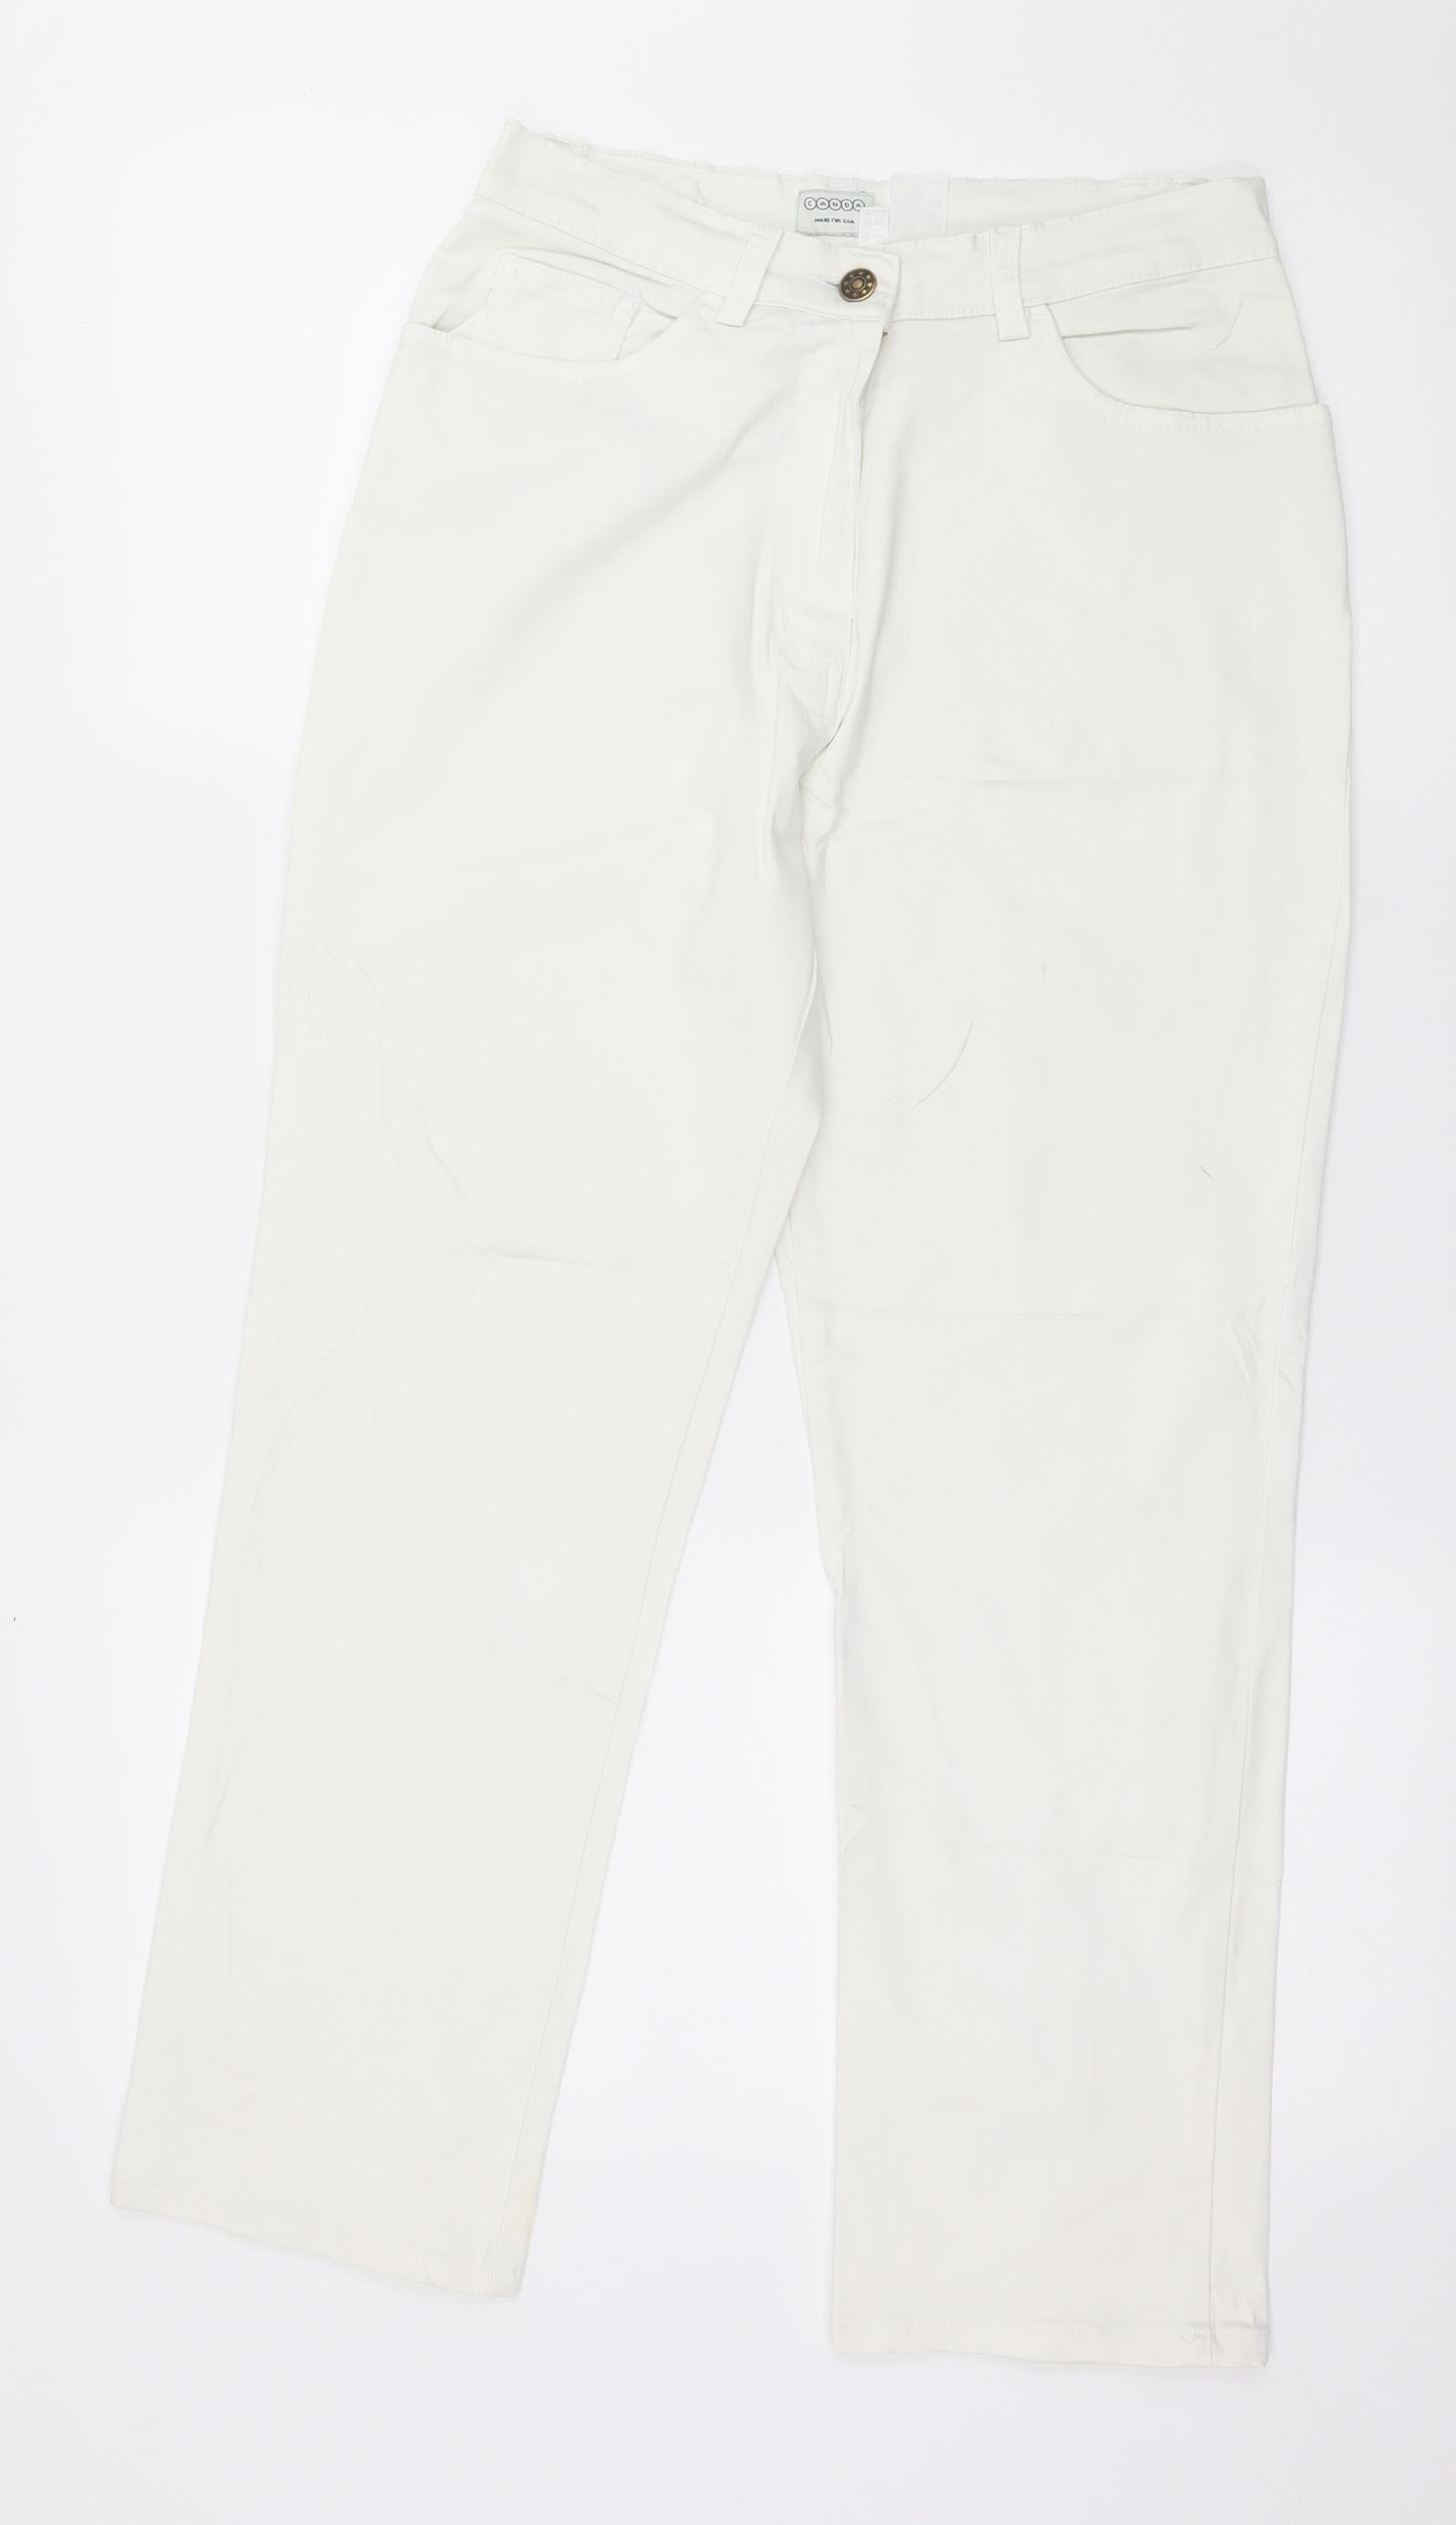 C&A Womens White Denim Straight Jeans Size 28 in L27 in – Preworn Ltd